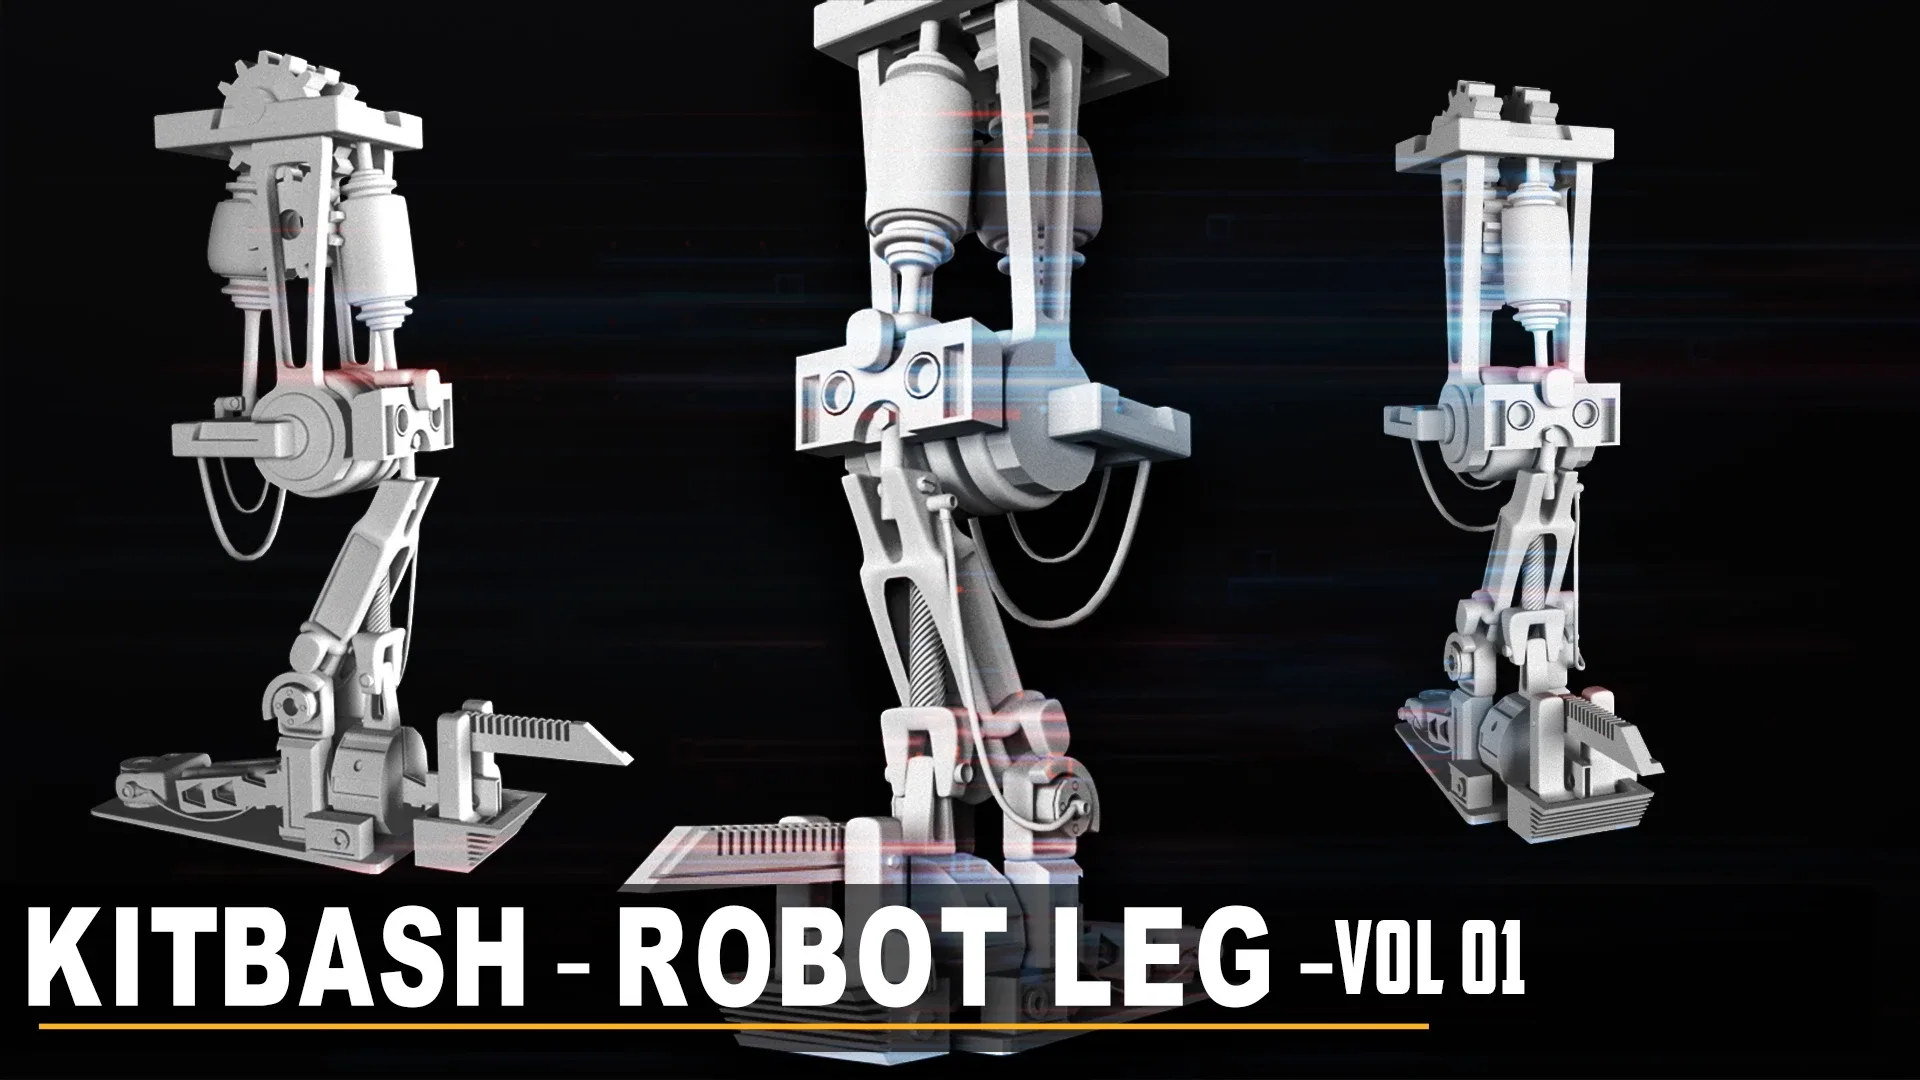 KitBash of Robot' Leg